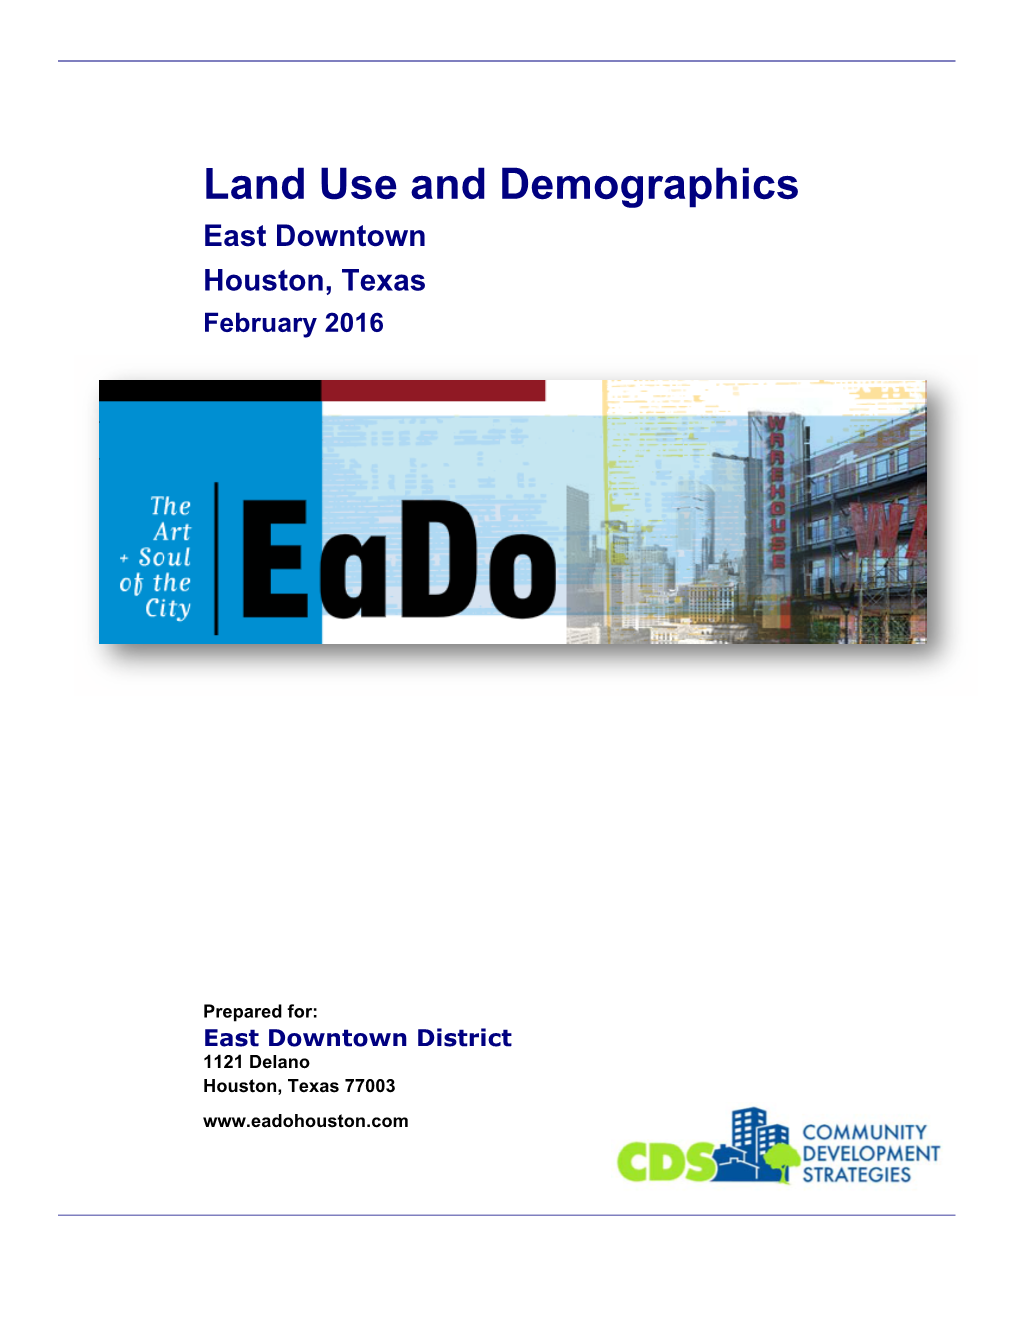 Land Use and Demographics East Downtown